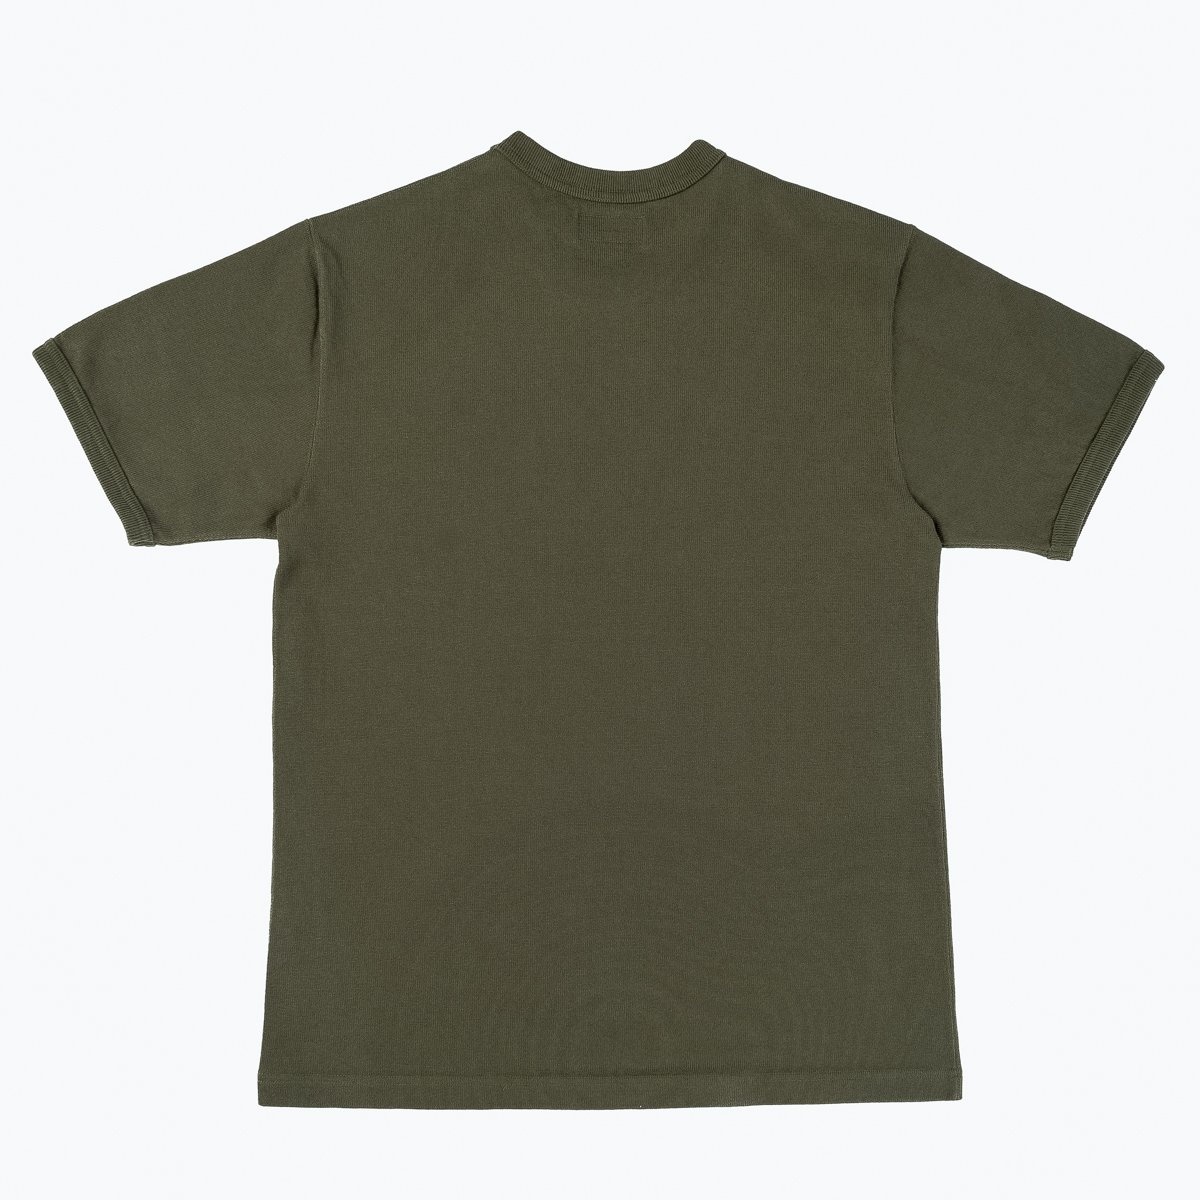 IHT-1600-OLV 11oz Cotton Knit Crew Neck T-Shirt - Olive - 5